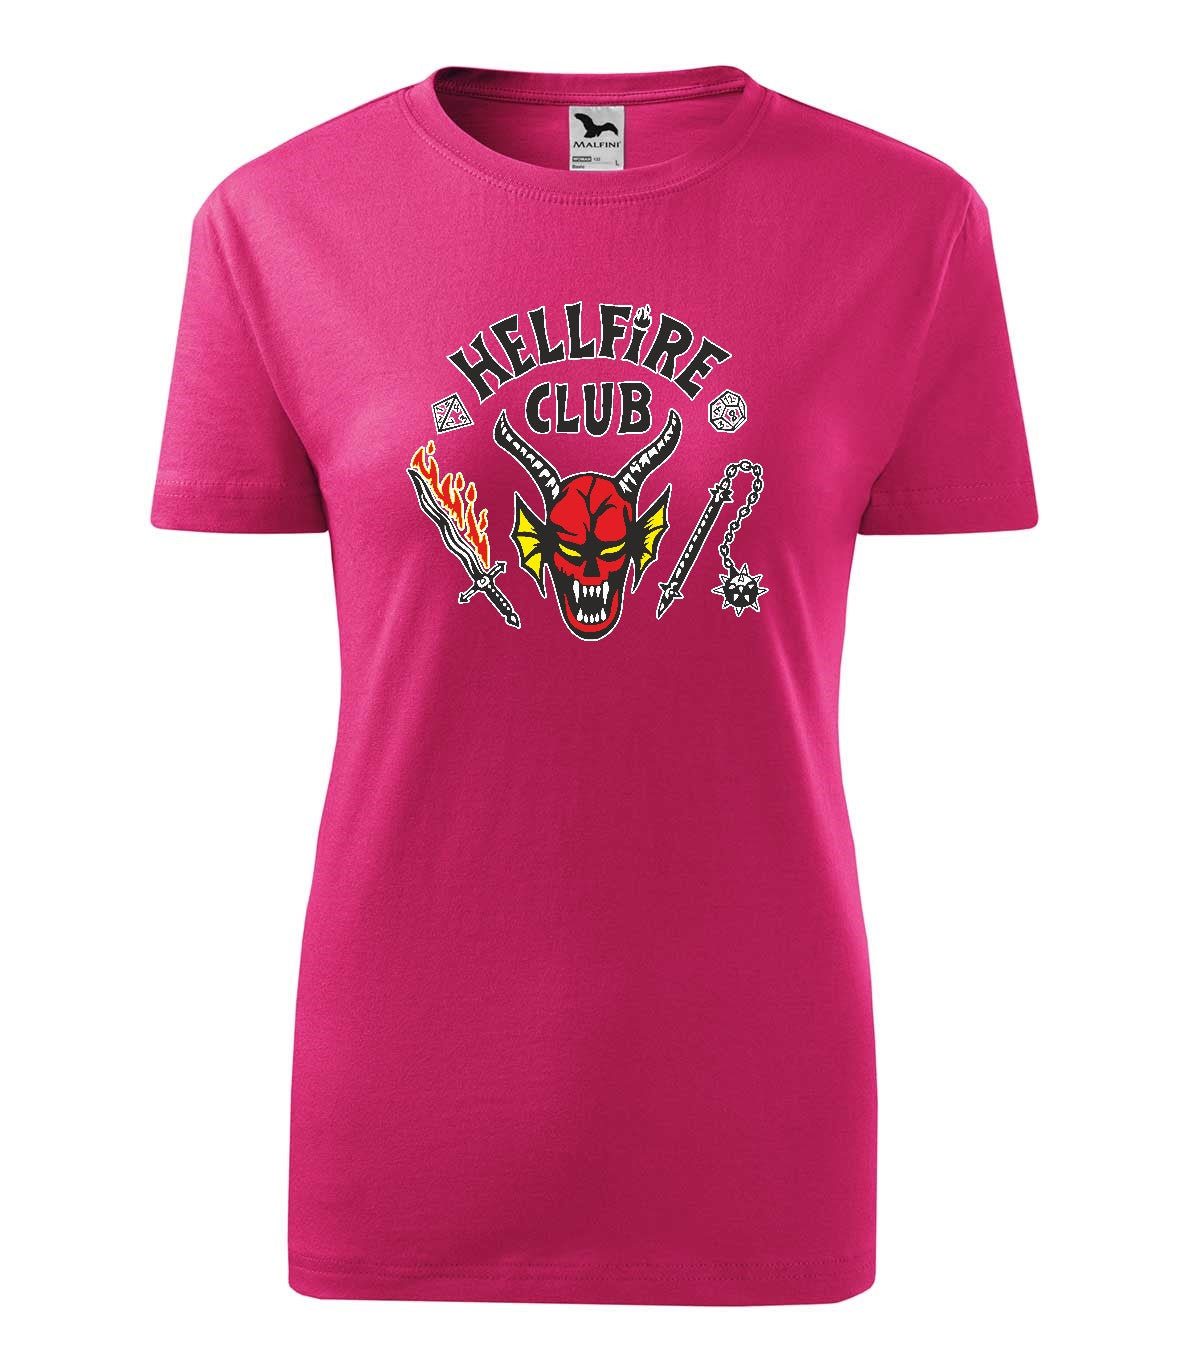 Hellfire Club női póló